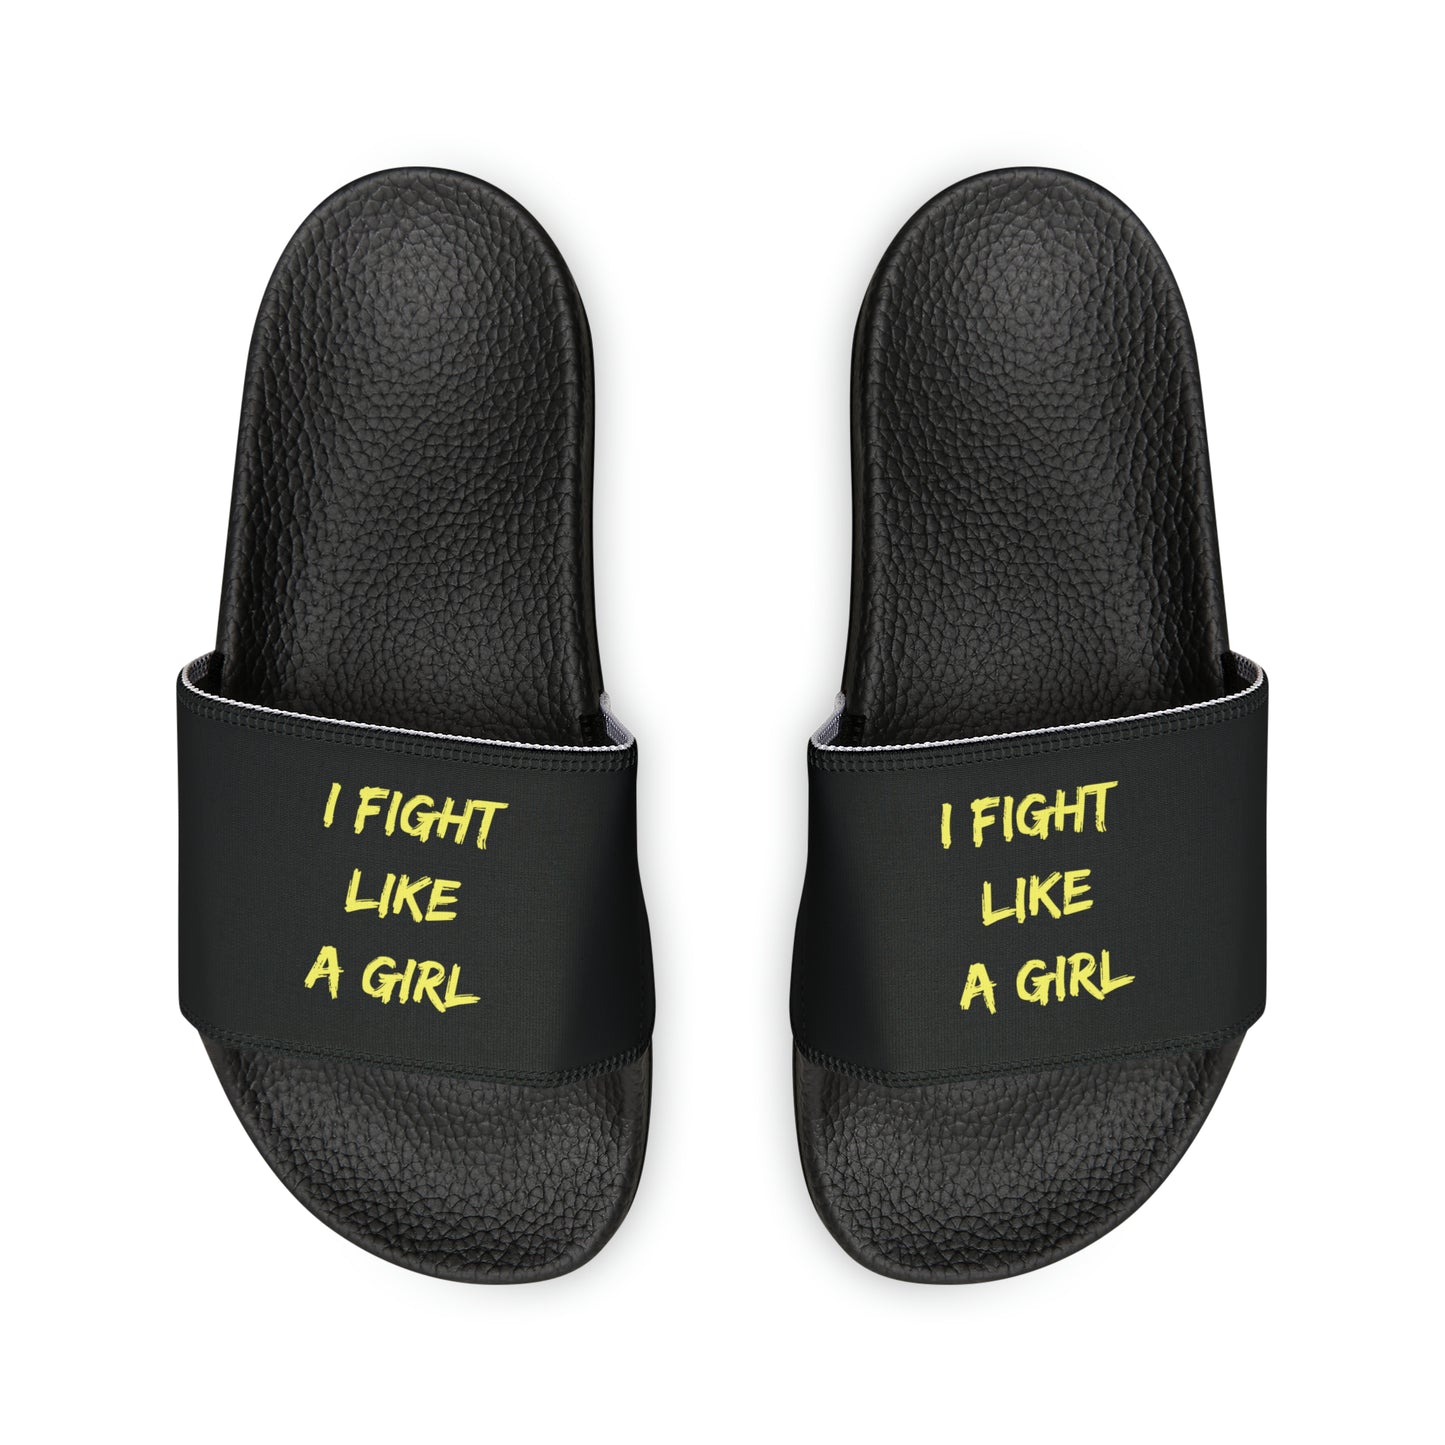 I Fight Like a Girl Slide Sandals - Black